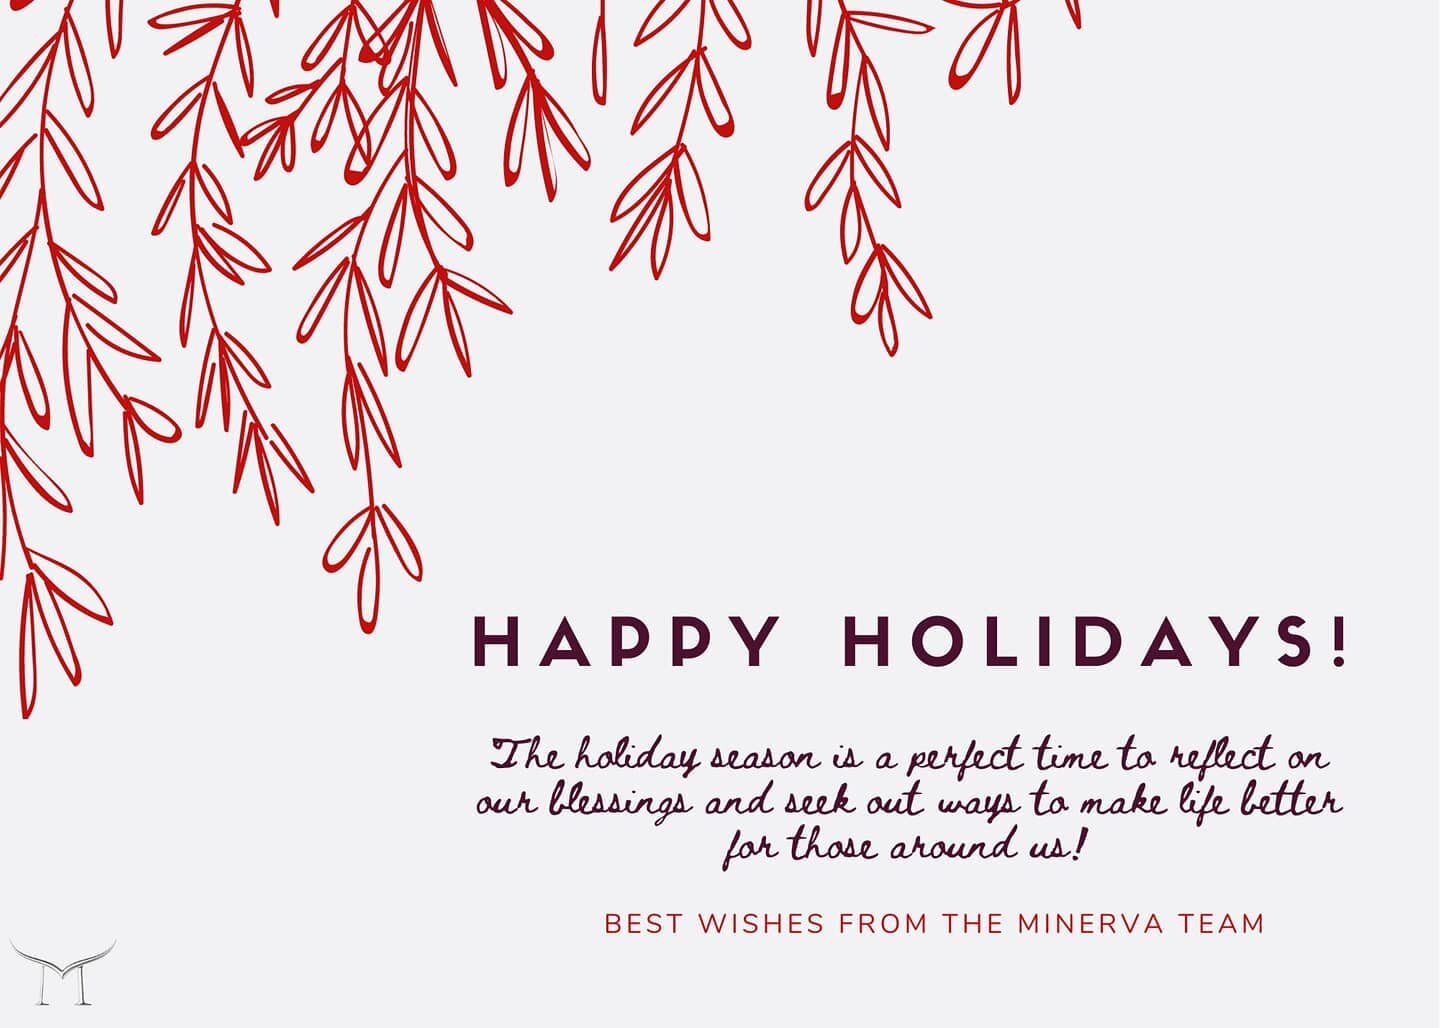 Wishing you all Happy Holidays from the Minerva team! 🌟
.
.
#minervafunds #impactinvest #holidayseason #2020holidays #reflection #gratitude